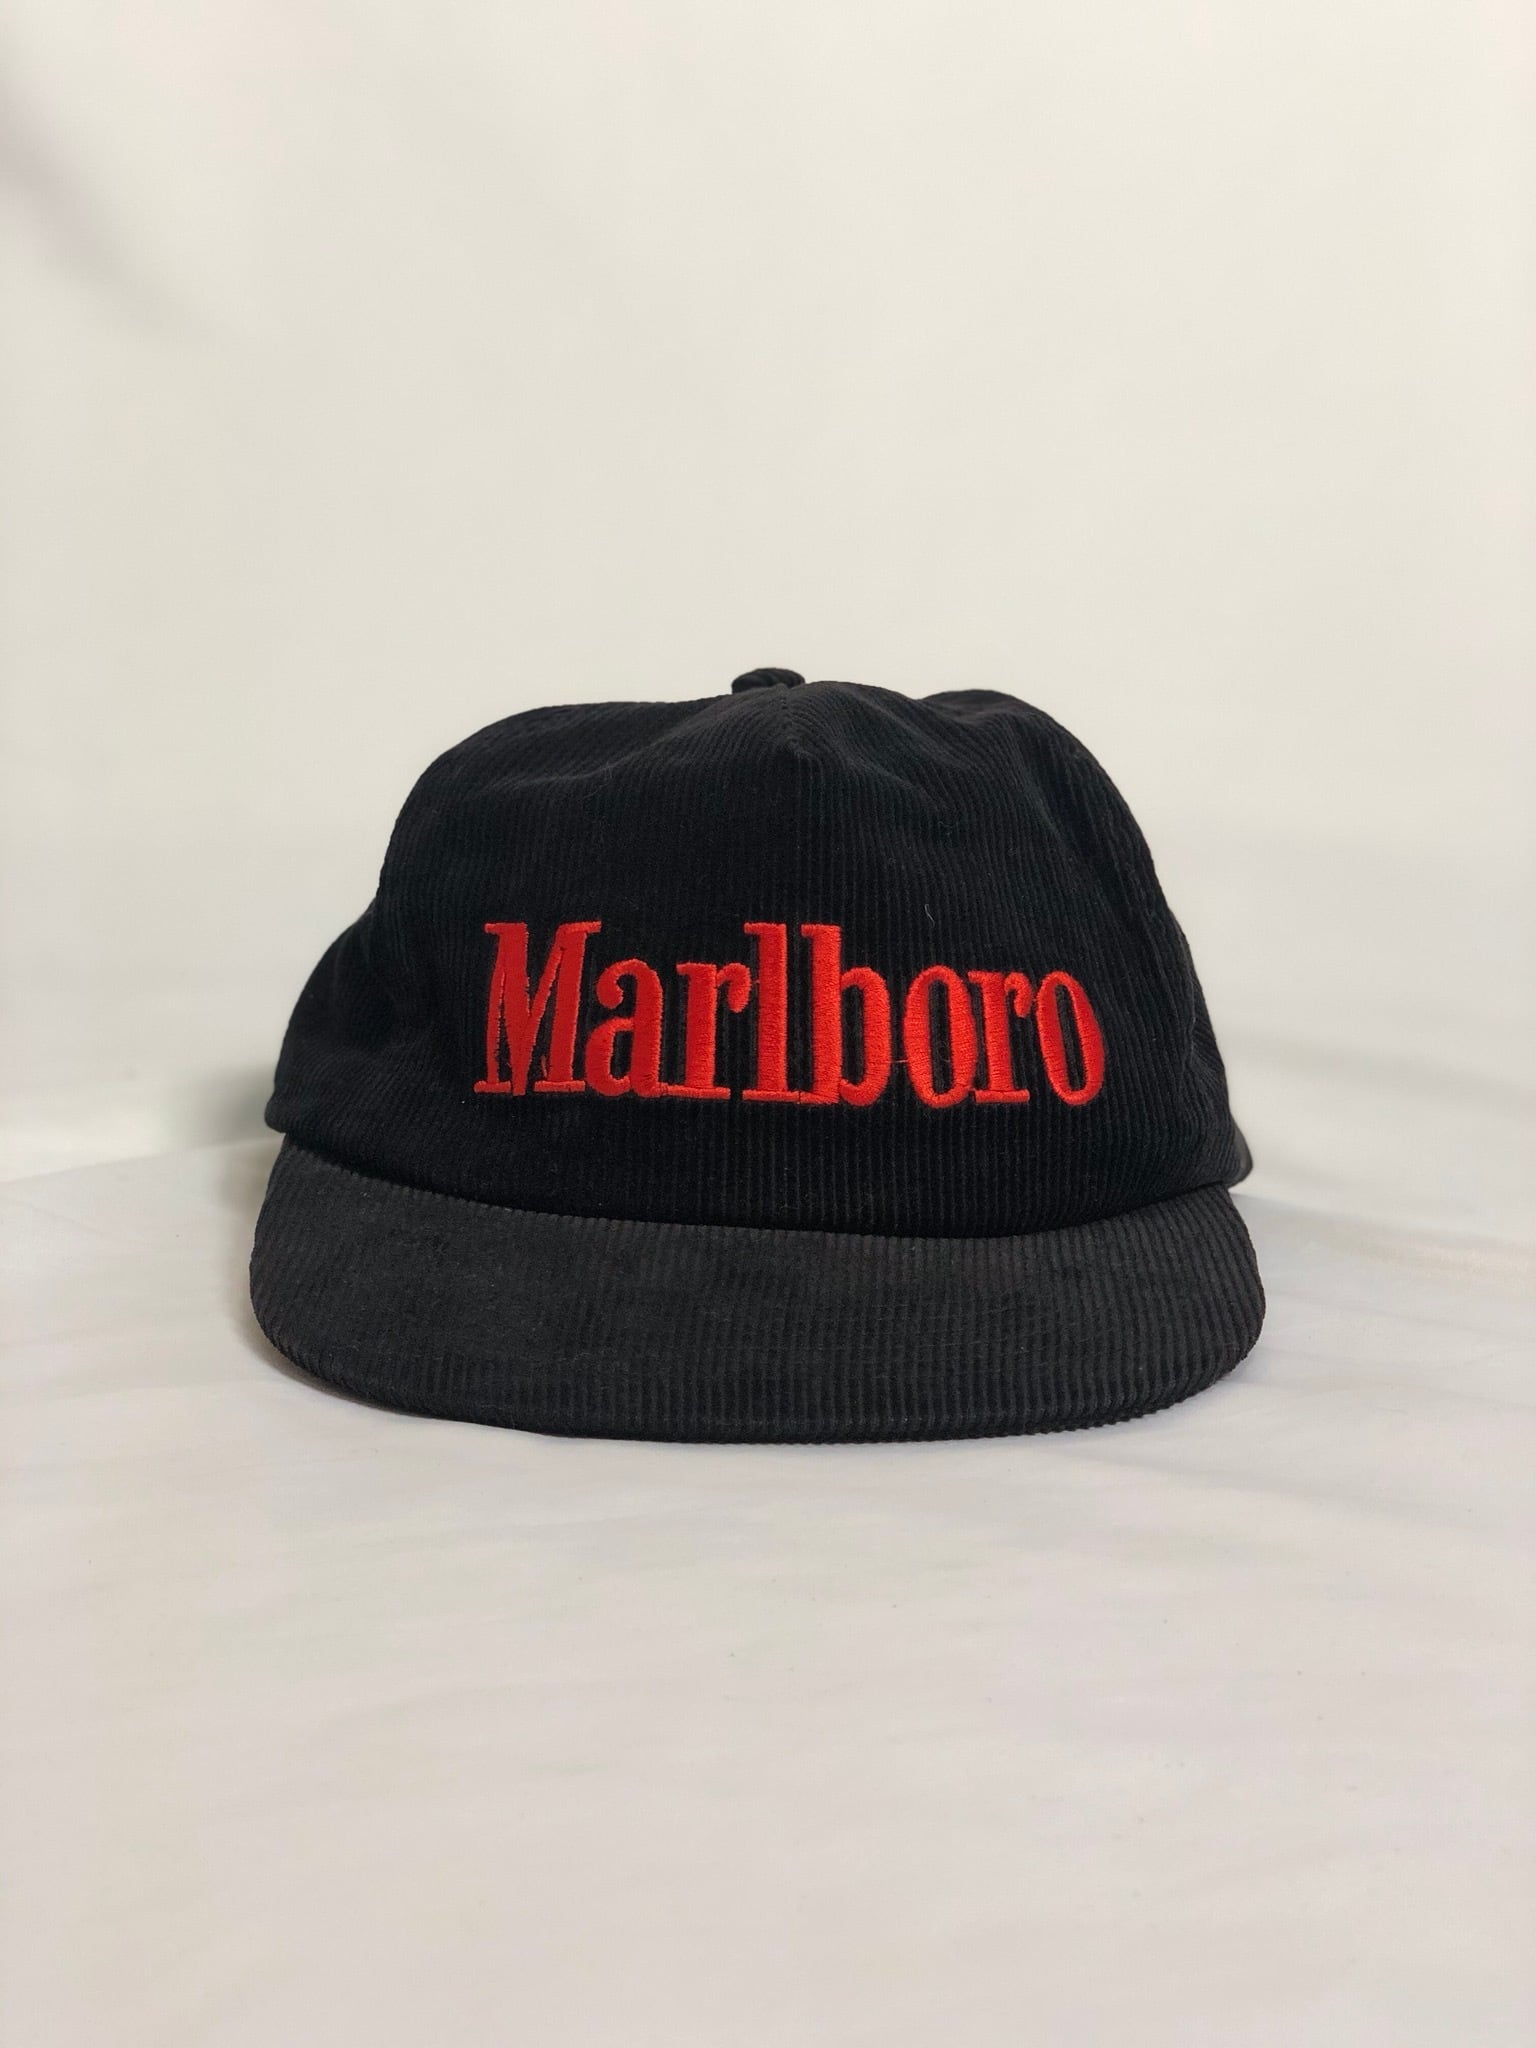 s "Marlboro" corduroy cap BLACK   IMGmentroom